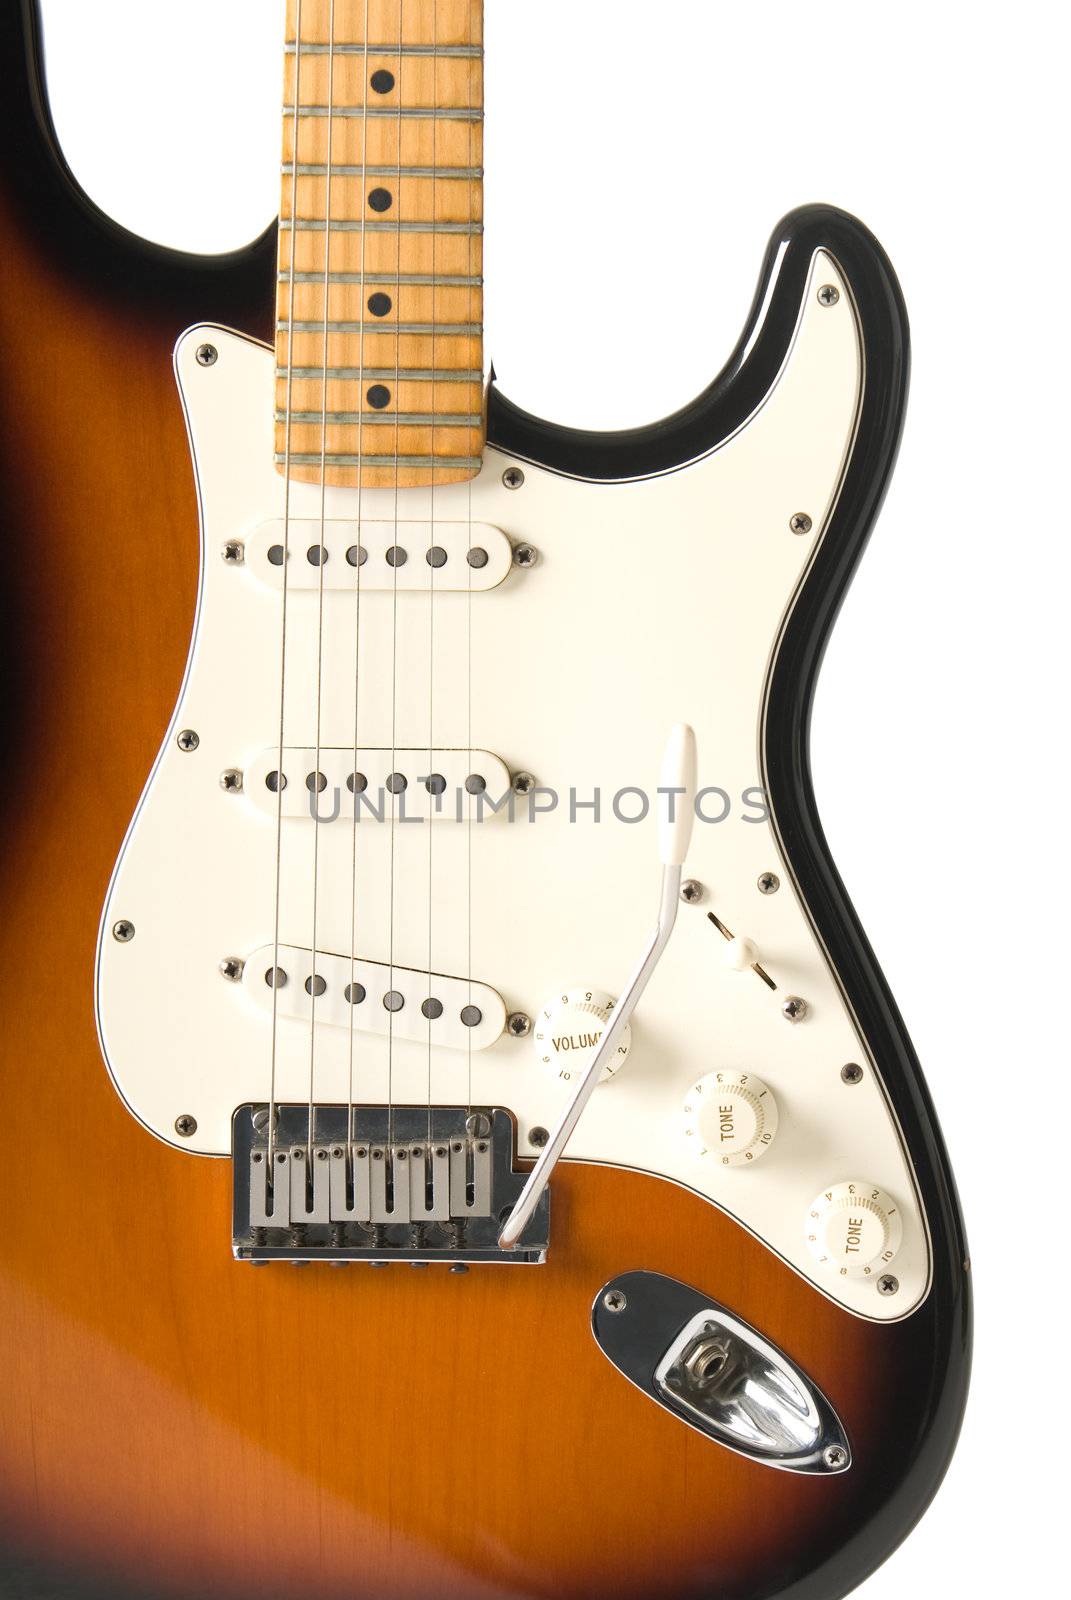 Guitar body (Stratocaster) on white background.